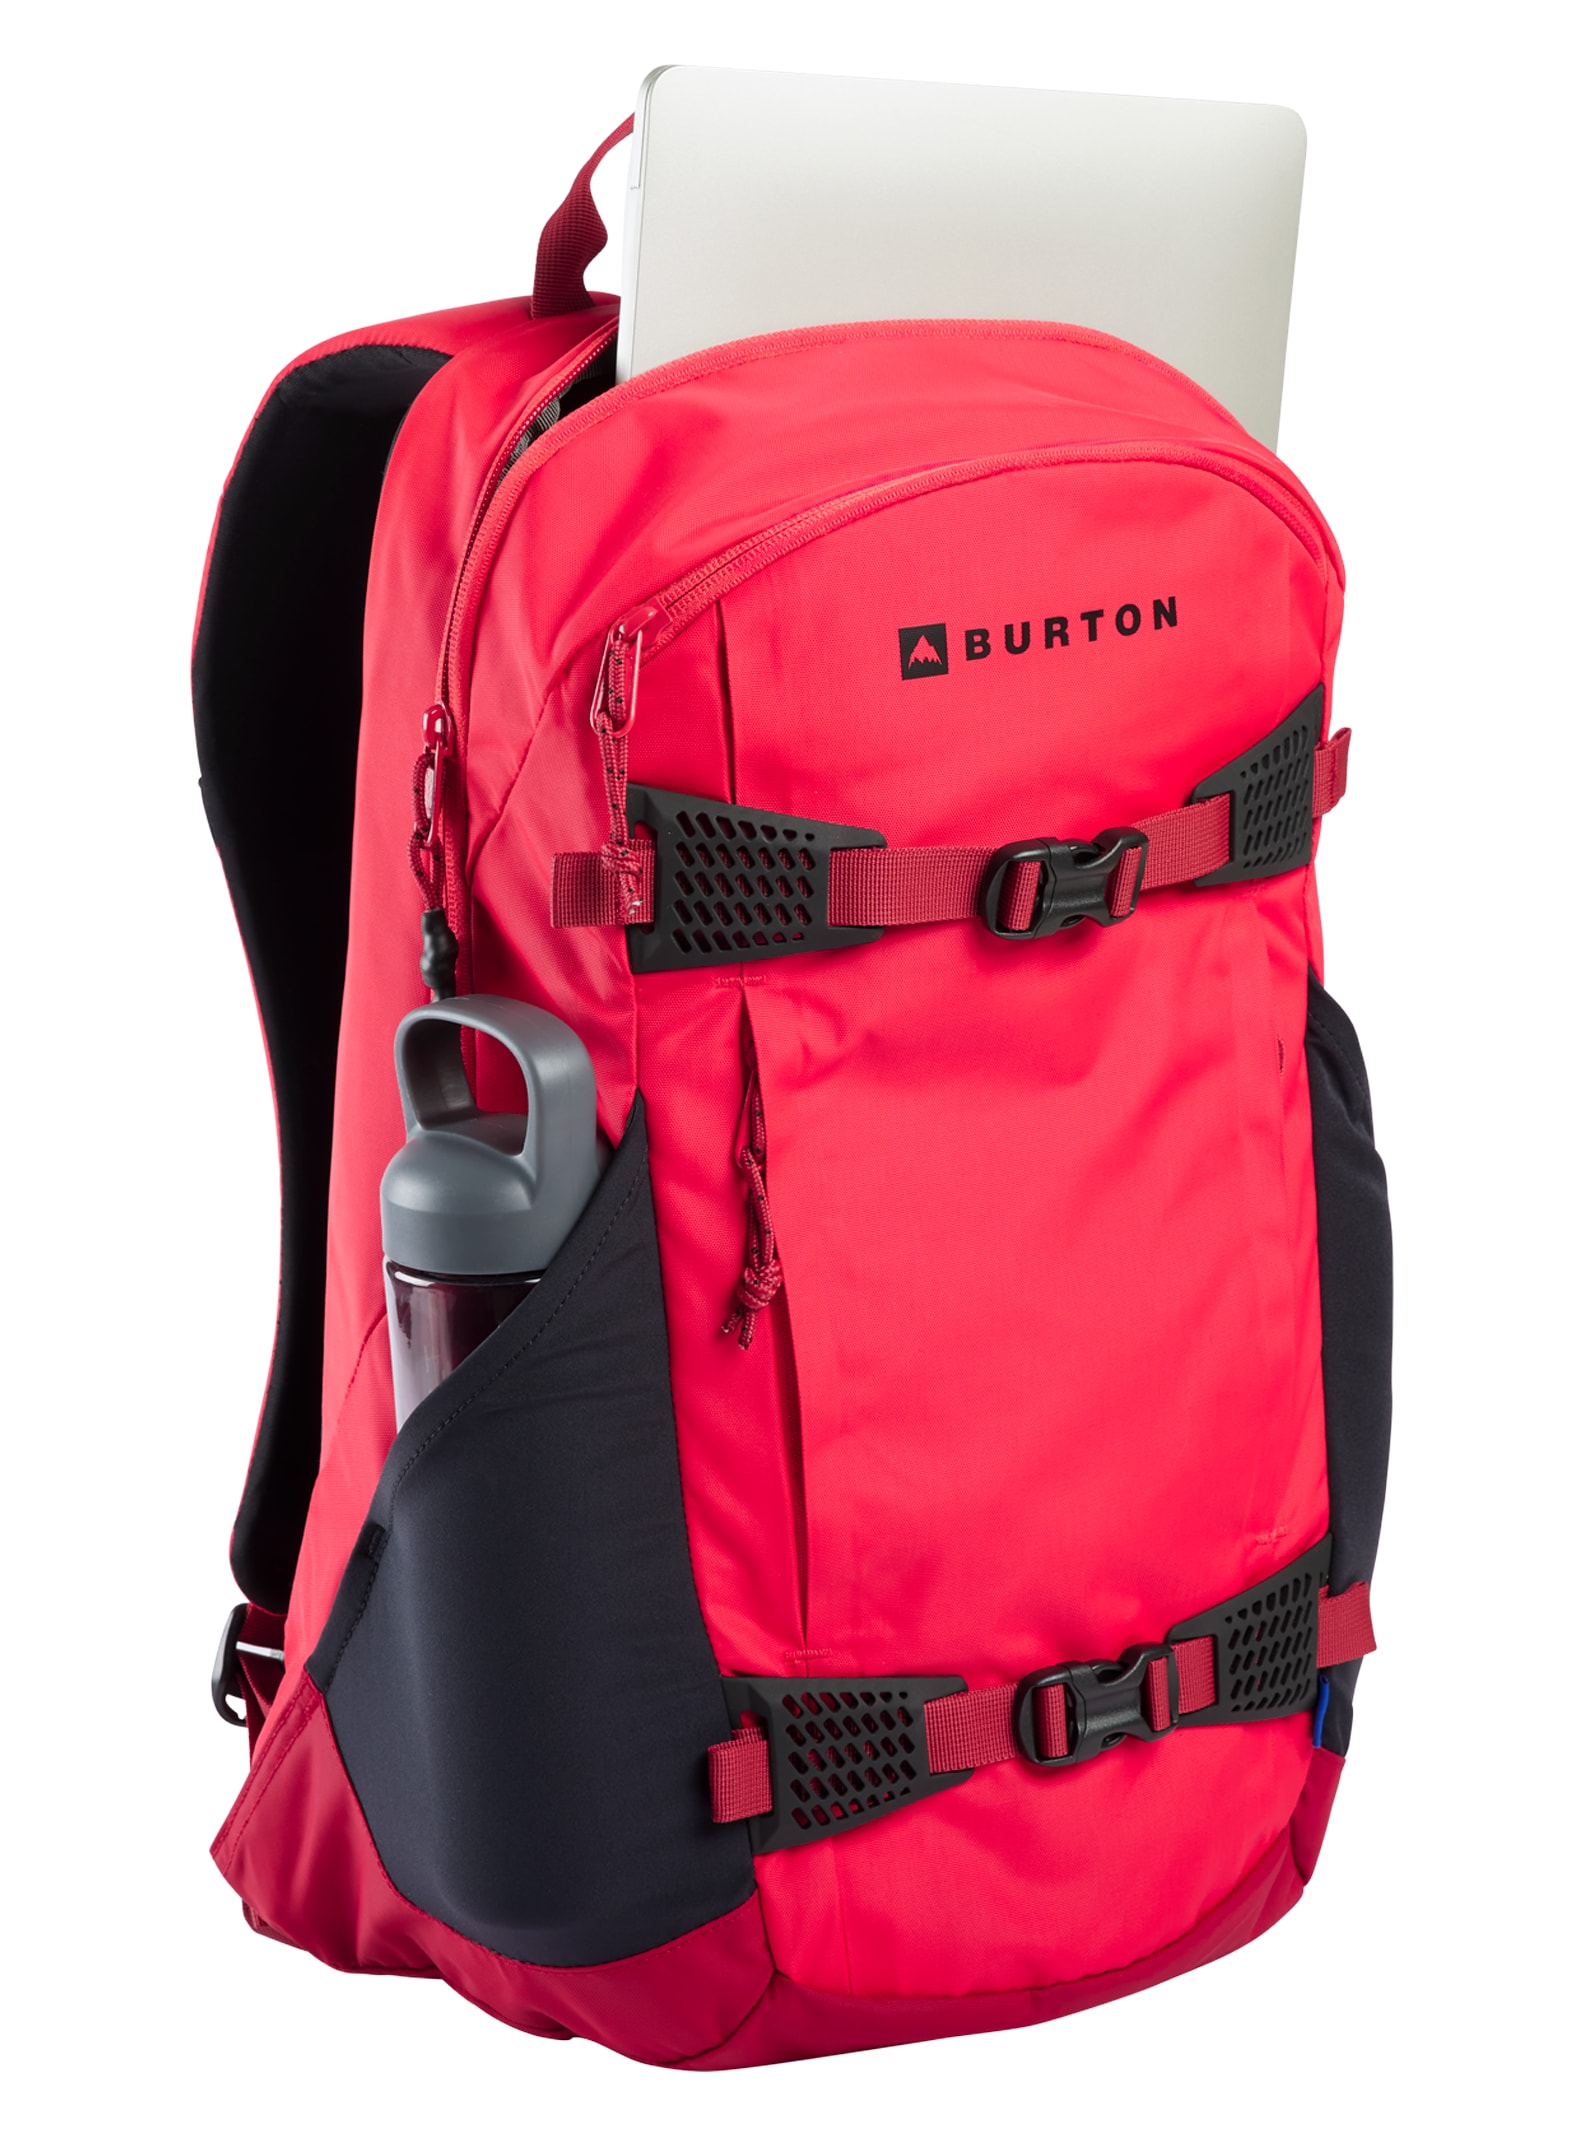 Men's, Women's, and Kids' Sale Backpacks | Burton Snowboards US